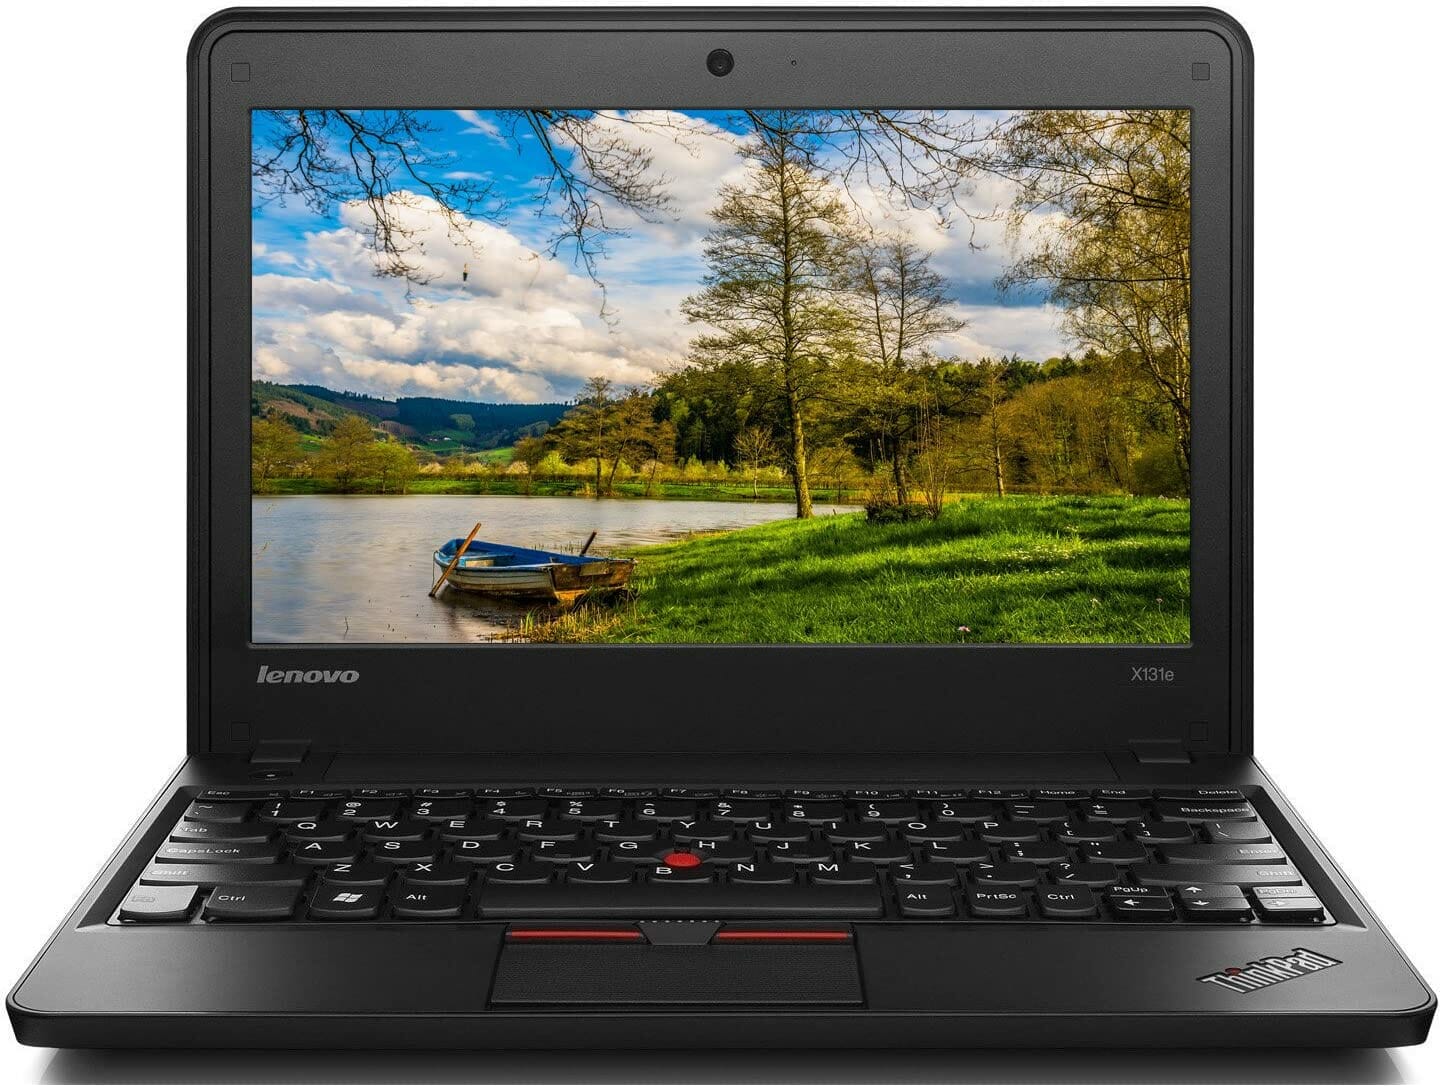 Lenovo Thinkpad X131e REFURBISHED AMD E2-Series E2-1800 4GB 320GB X131E-AMD-320GB